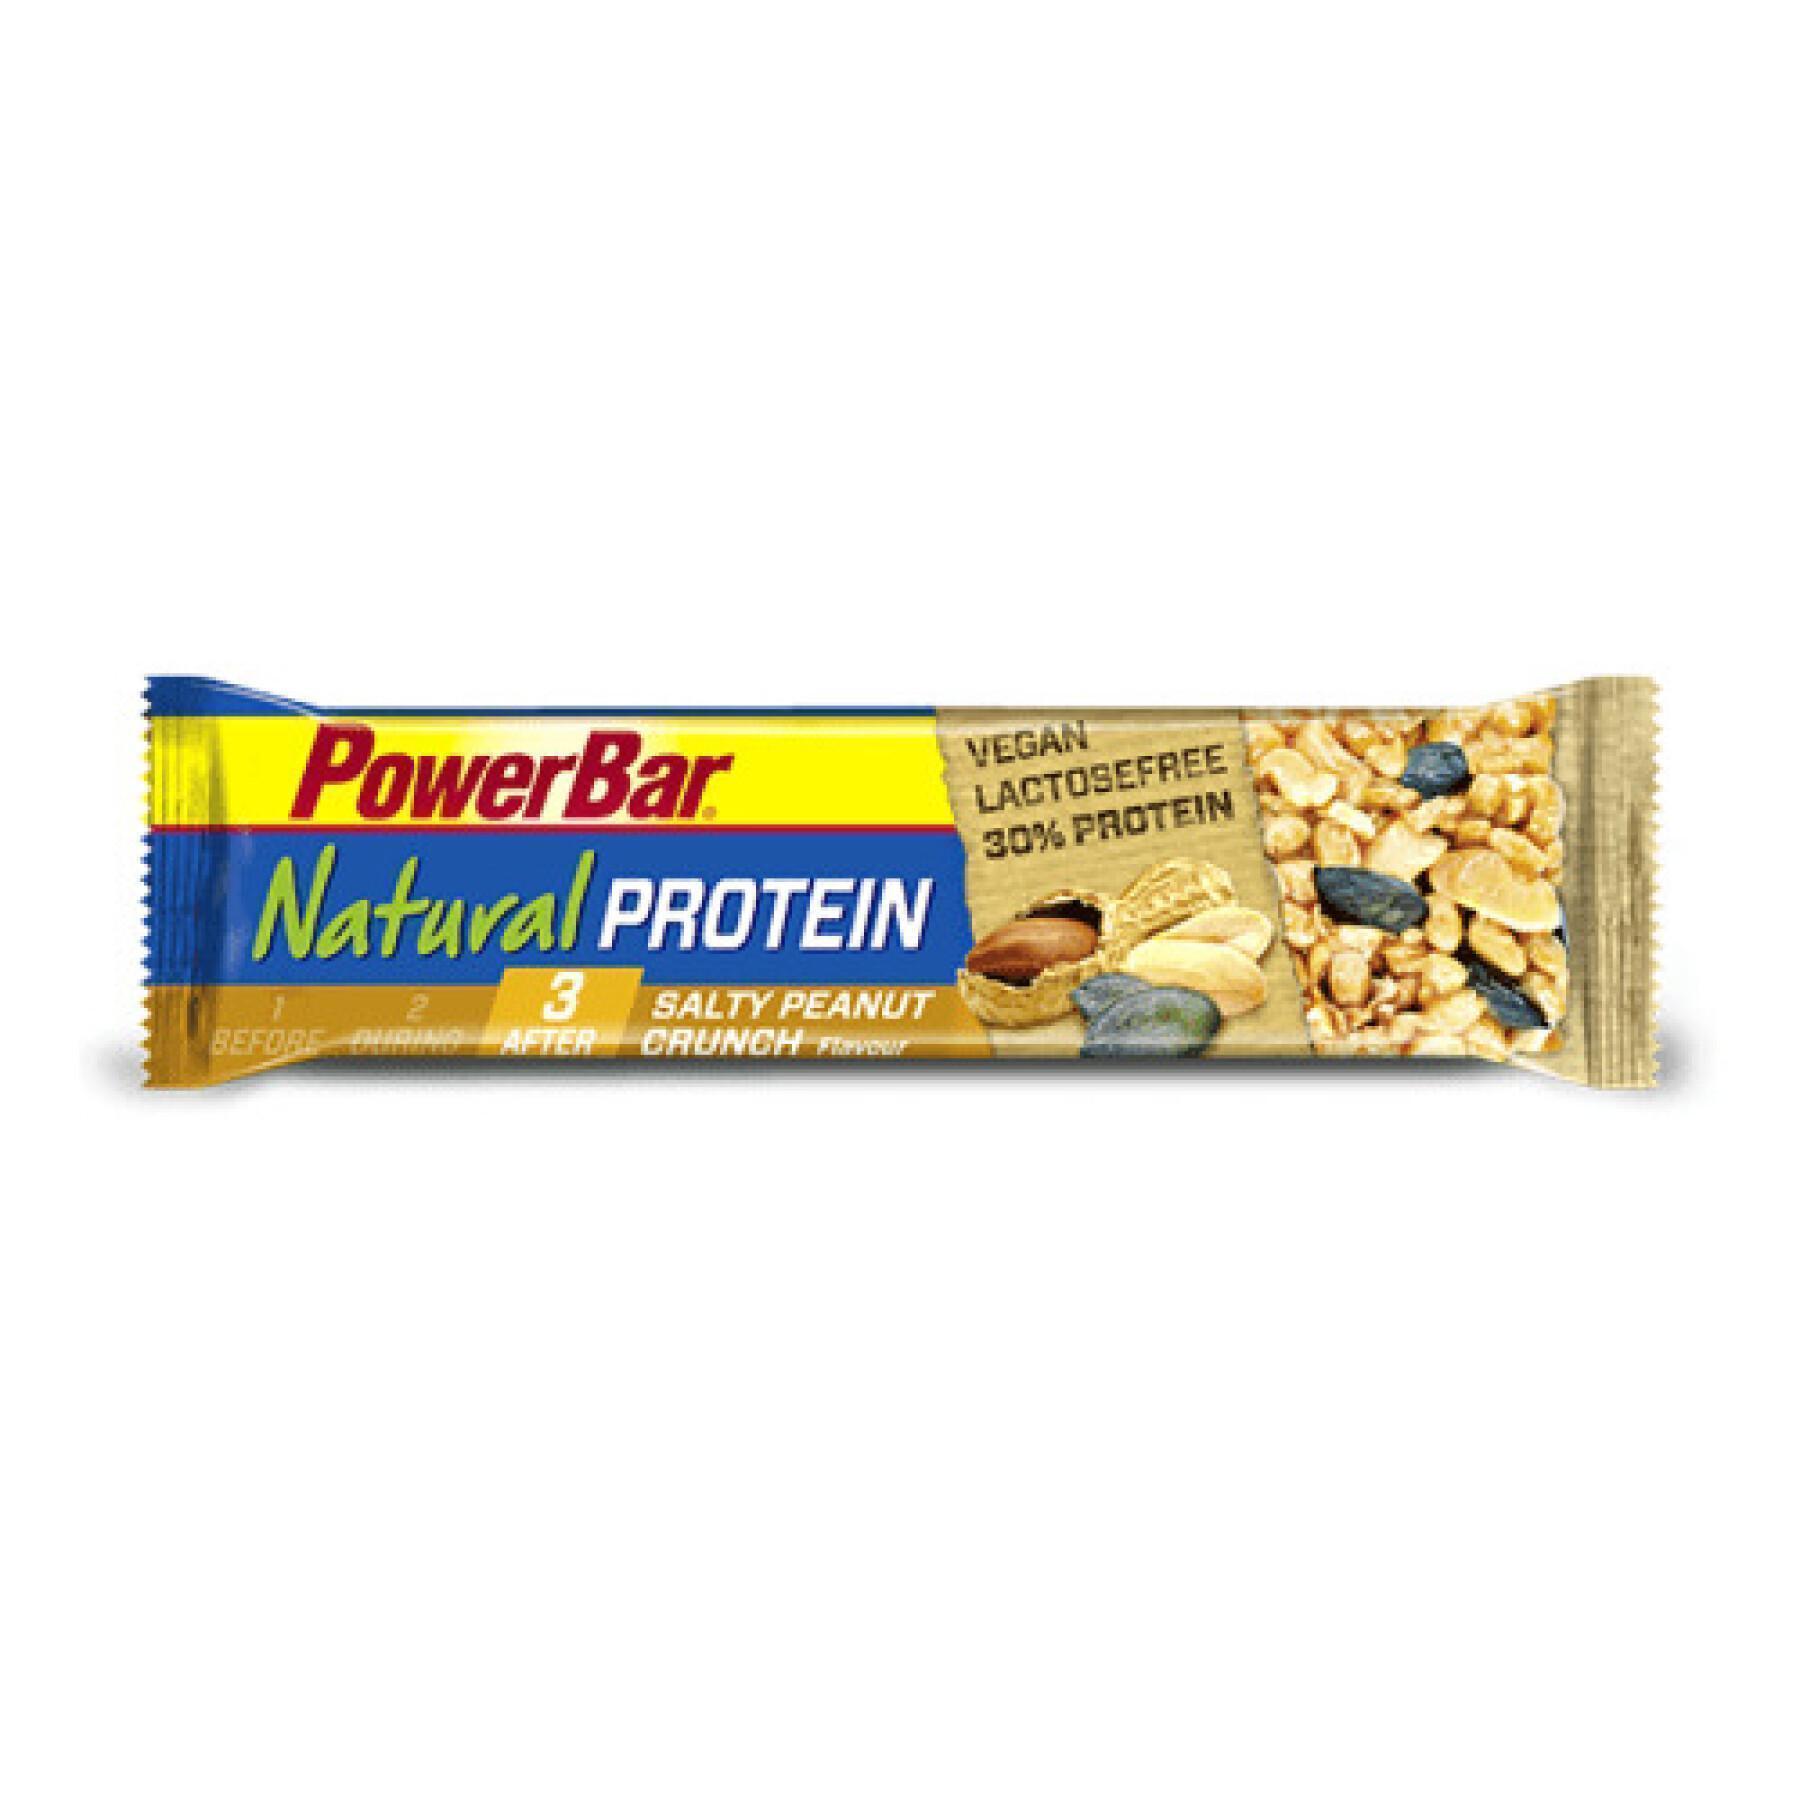 Lot de 24 barres PowerBar Natural Protein Vegan - Salty Peanut Crunch